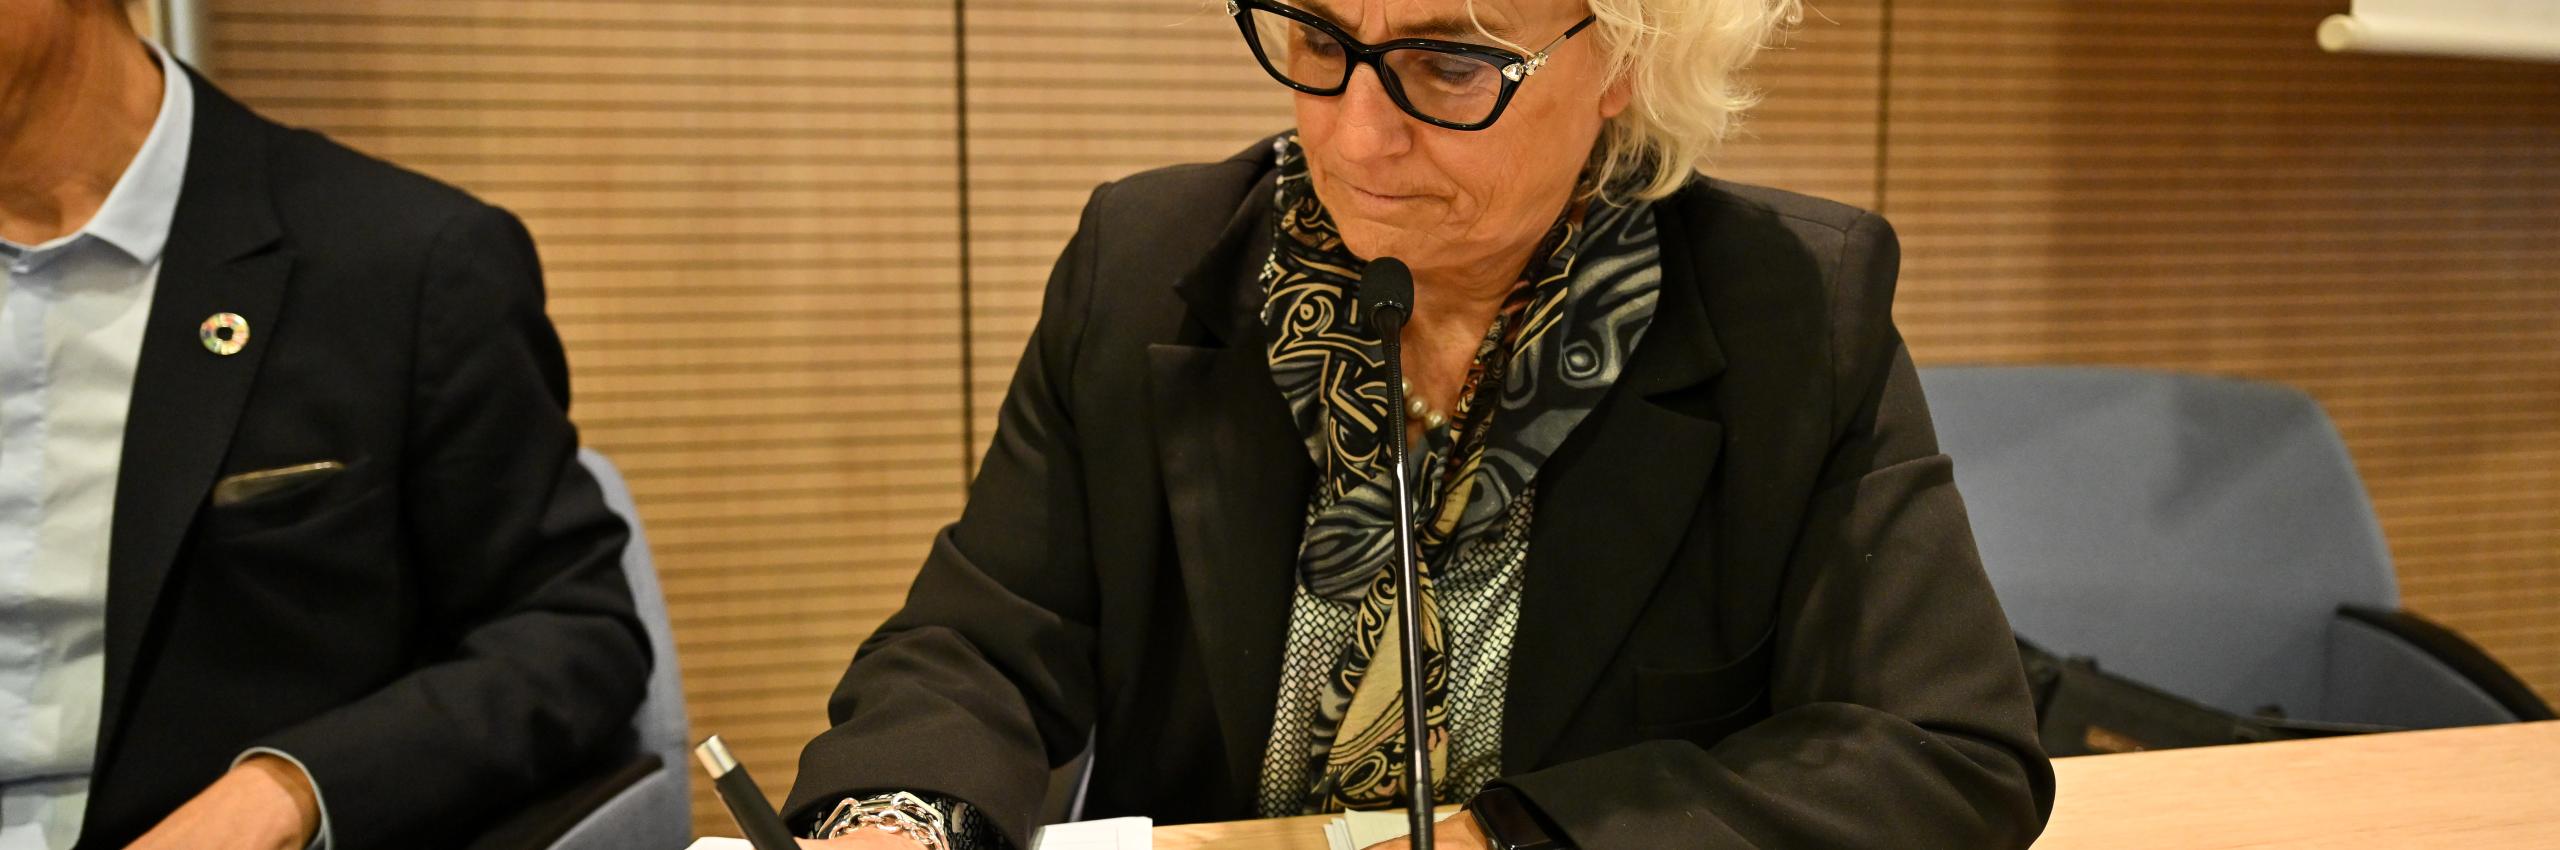 Carla Masperi